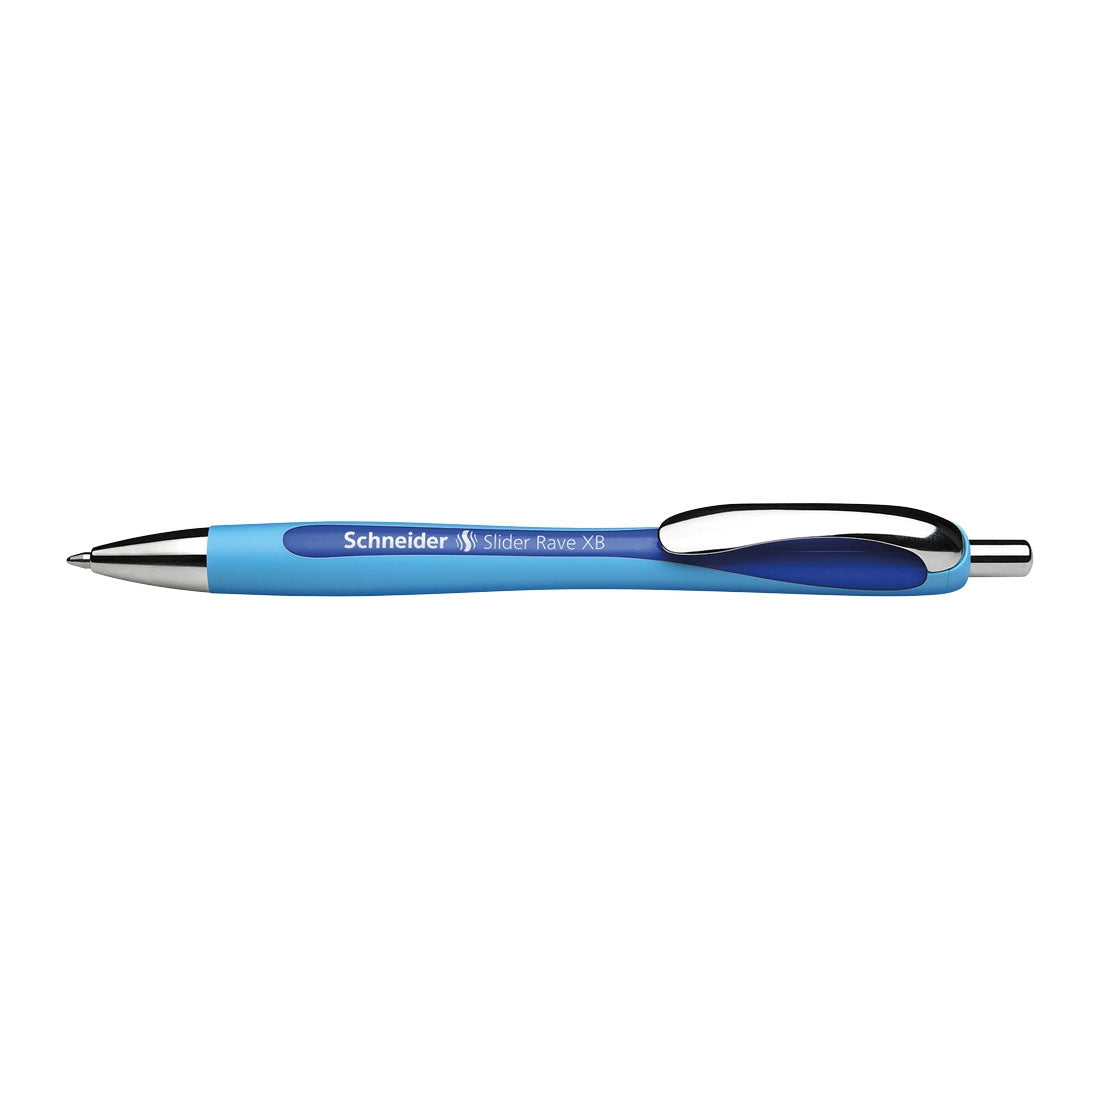 Rave Ballpoint Pen XB, Box of 5 units#ink-color_blue